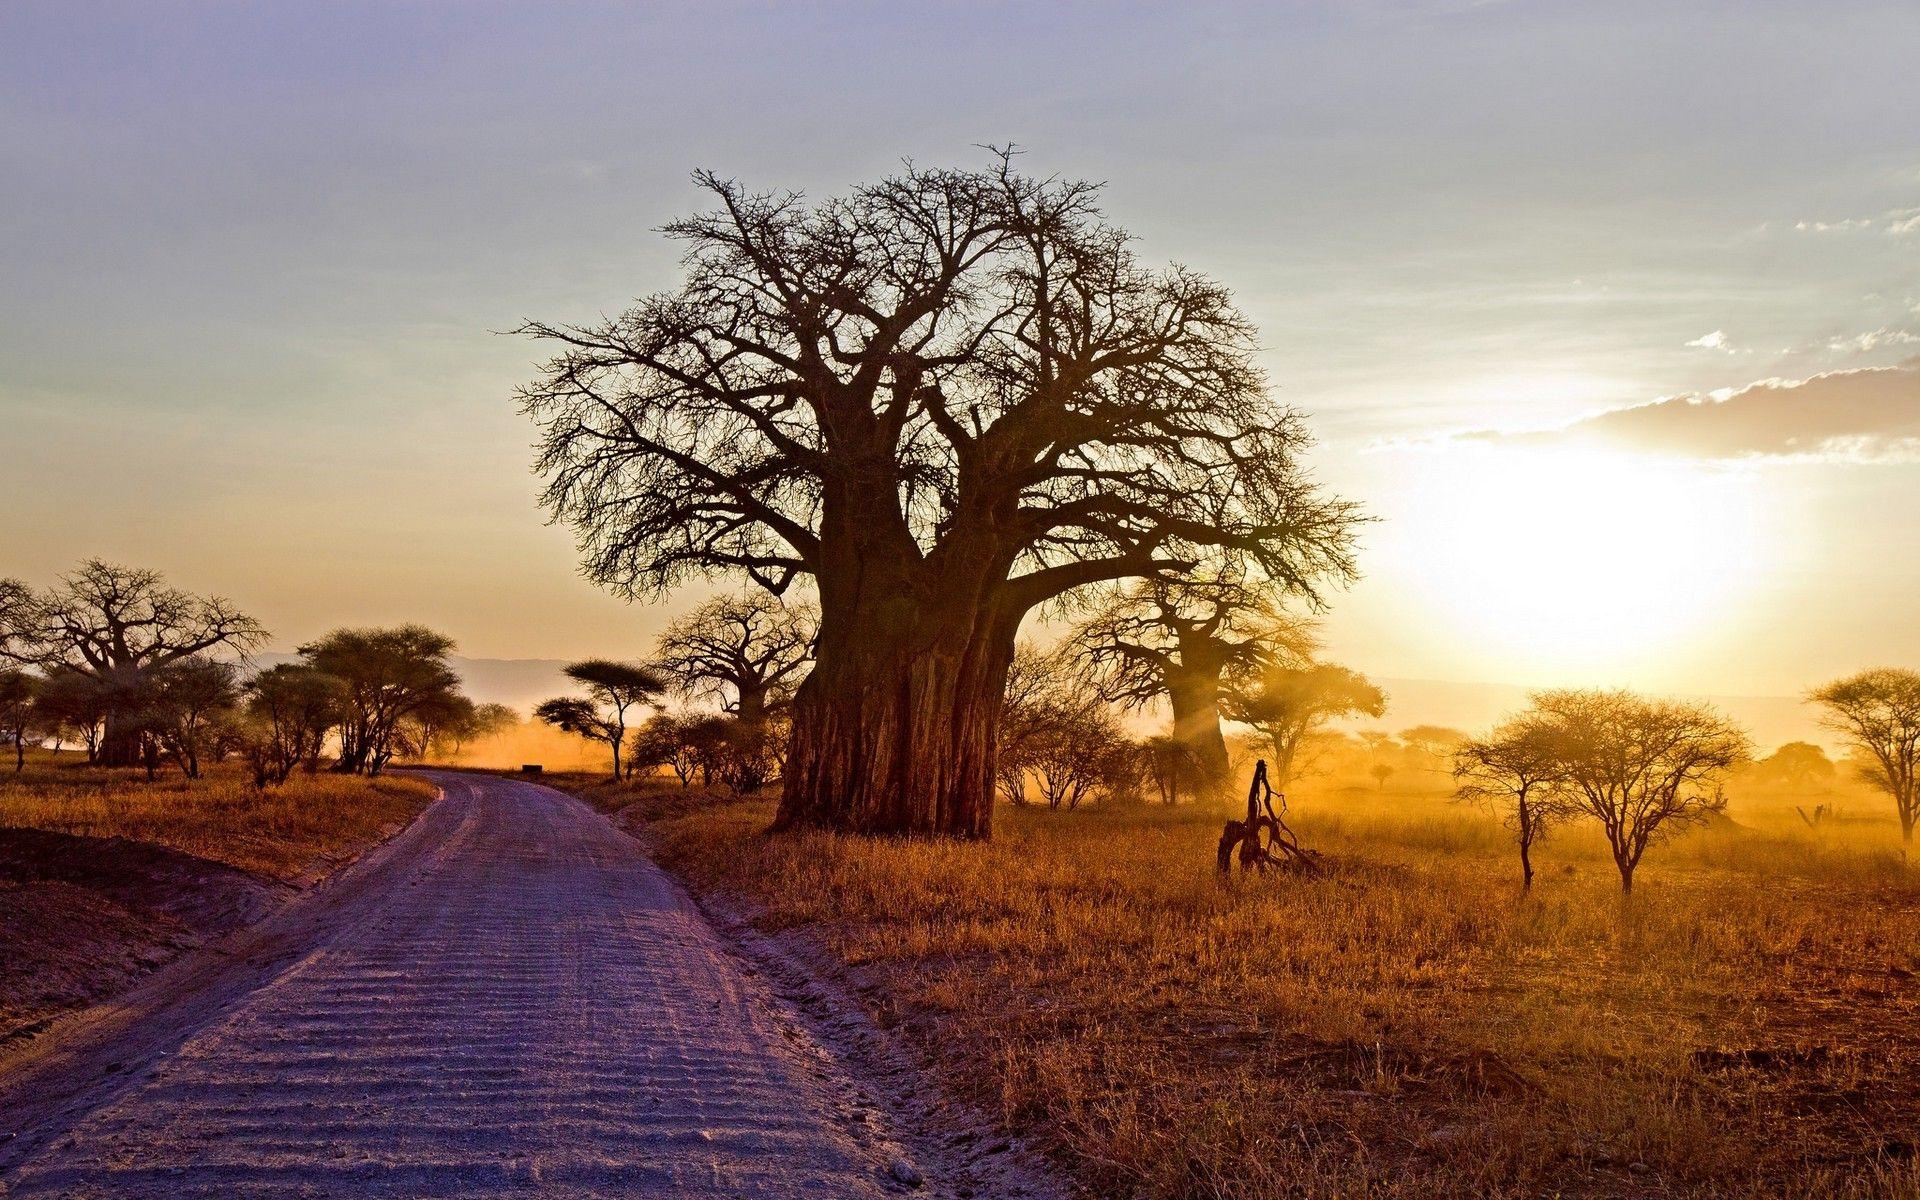 Landscape, Nature, Baobab Trees, Dry Grass, Dirt Road, Shrubs